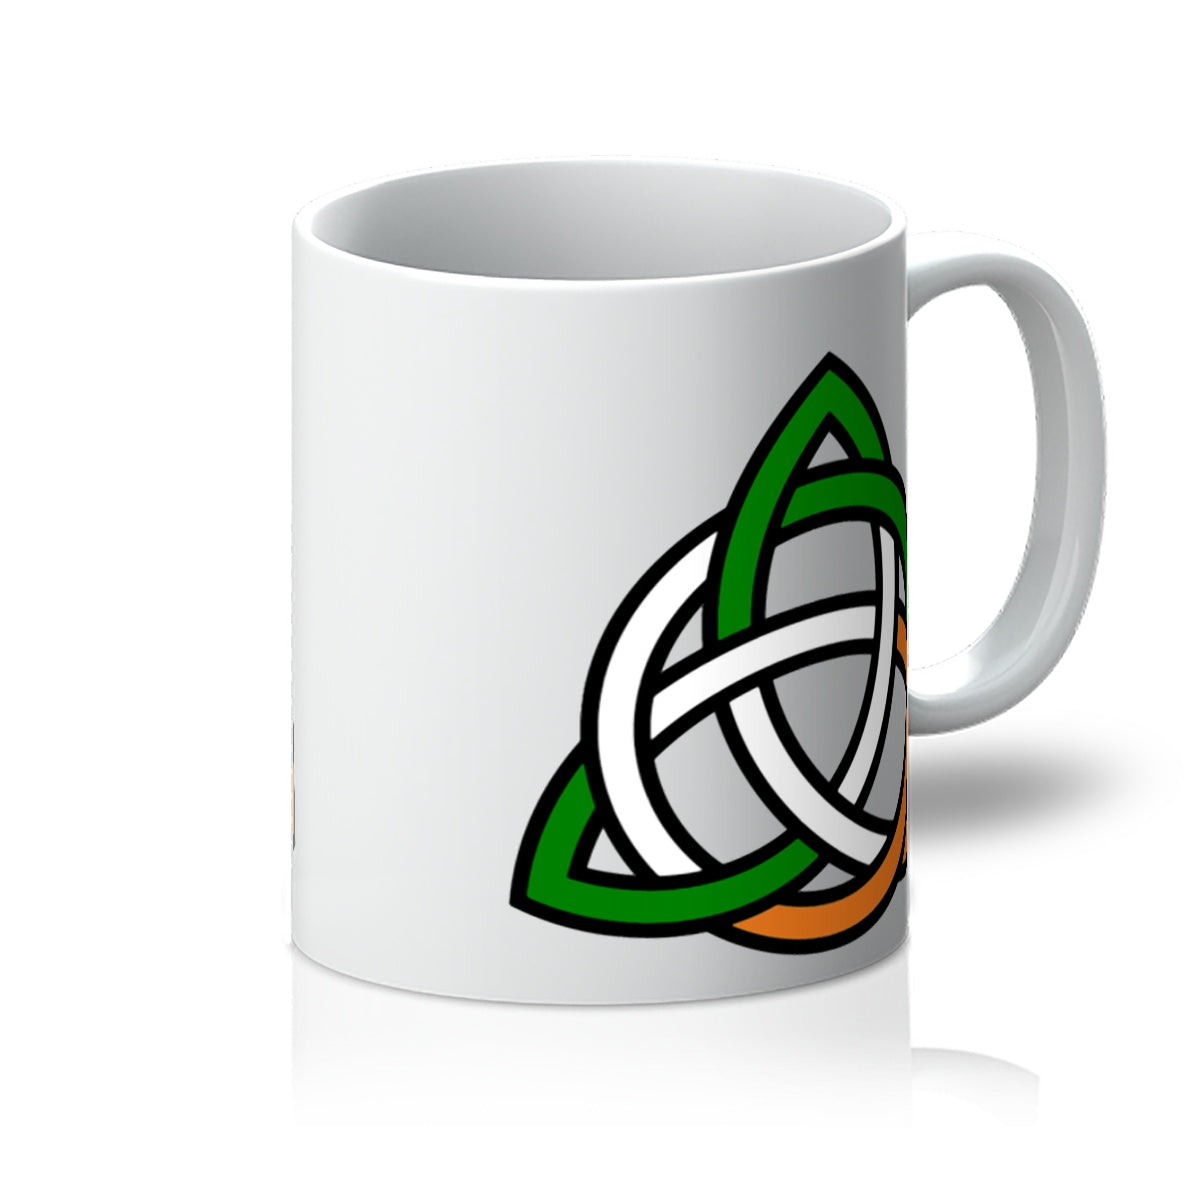 Irish Celtic Knot Mug